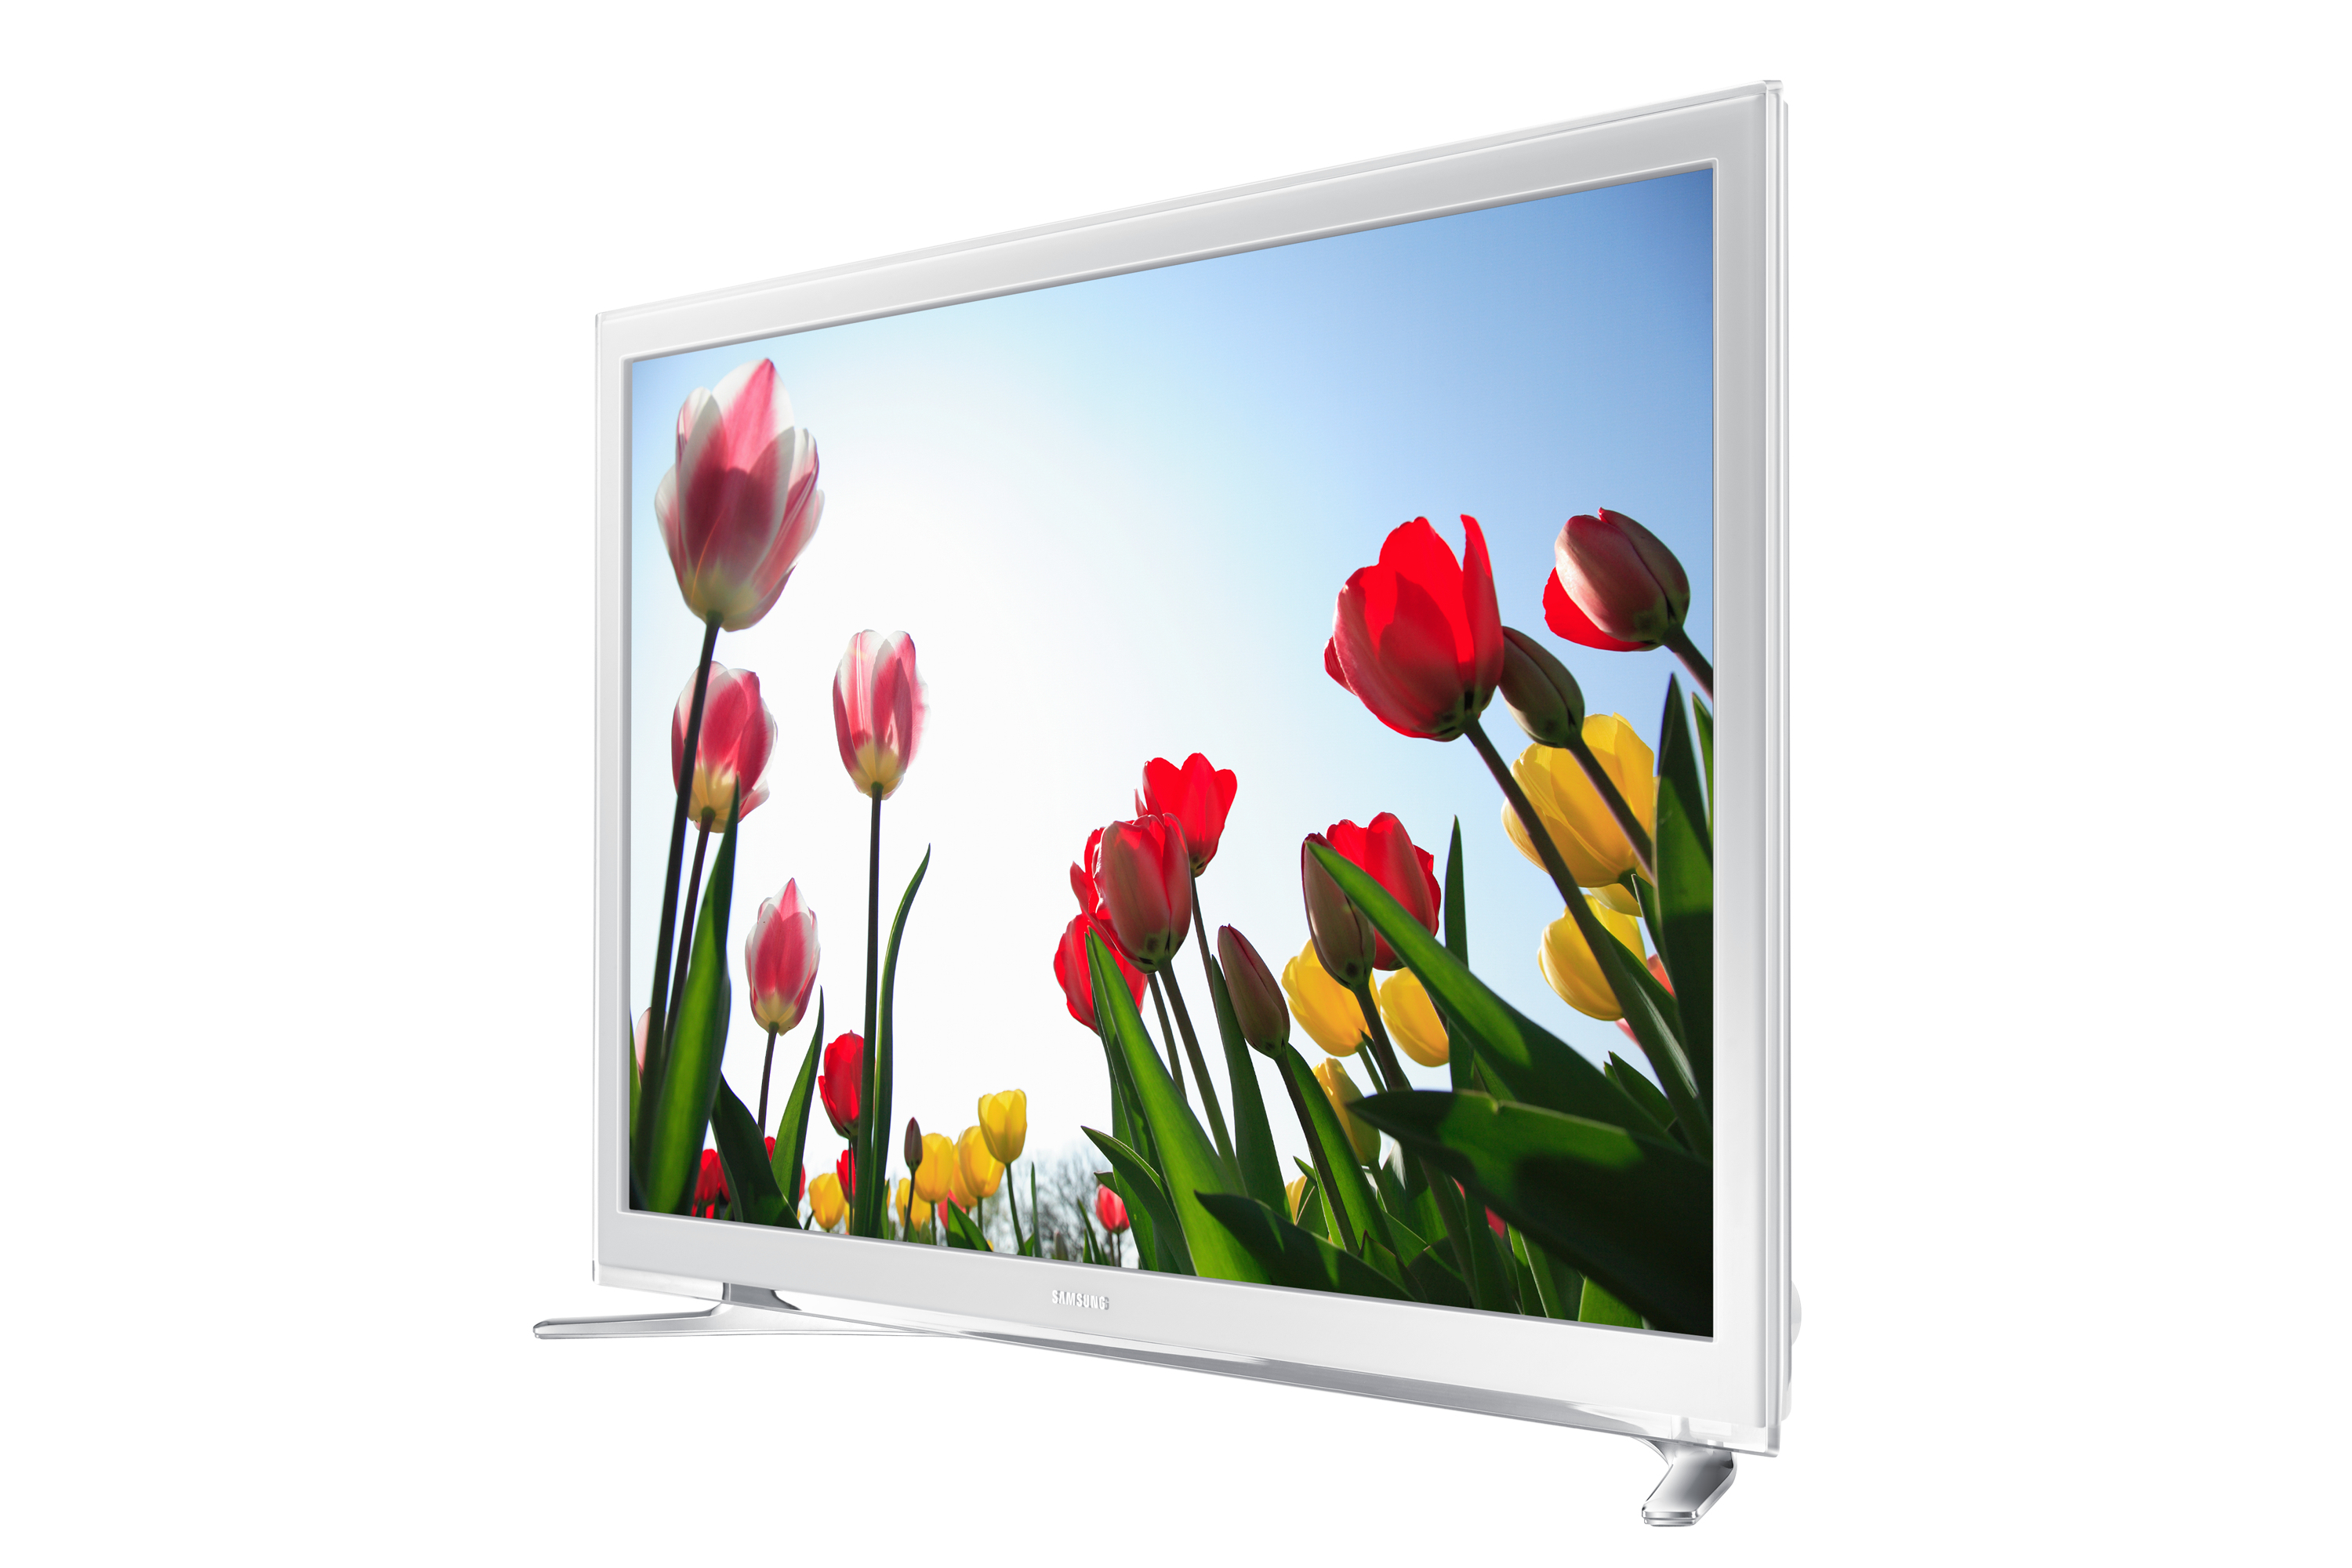 Купить телевизор в магазине самсунг. Samsung ue32h4510. Samsung Smart TV 32 дюйма белый. Samsung ue22f5410. 22h5610samsung.